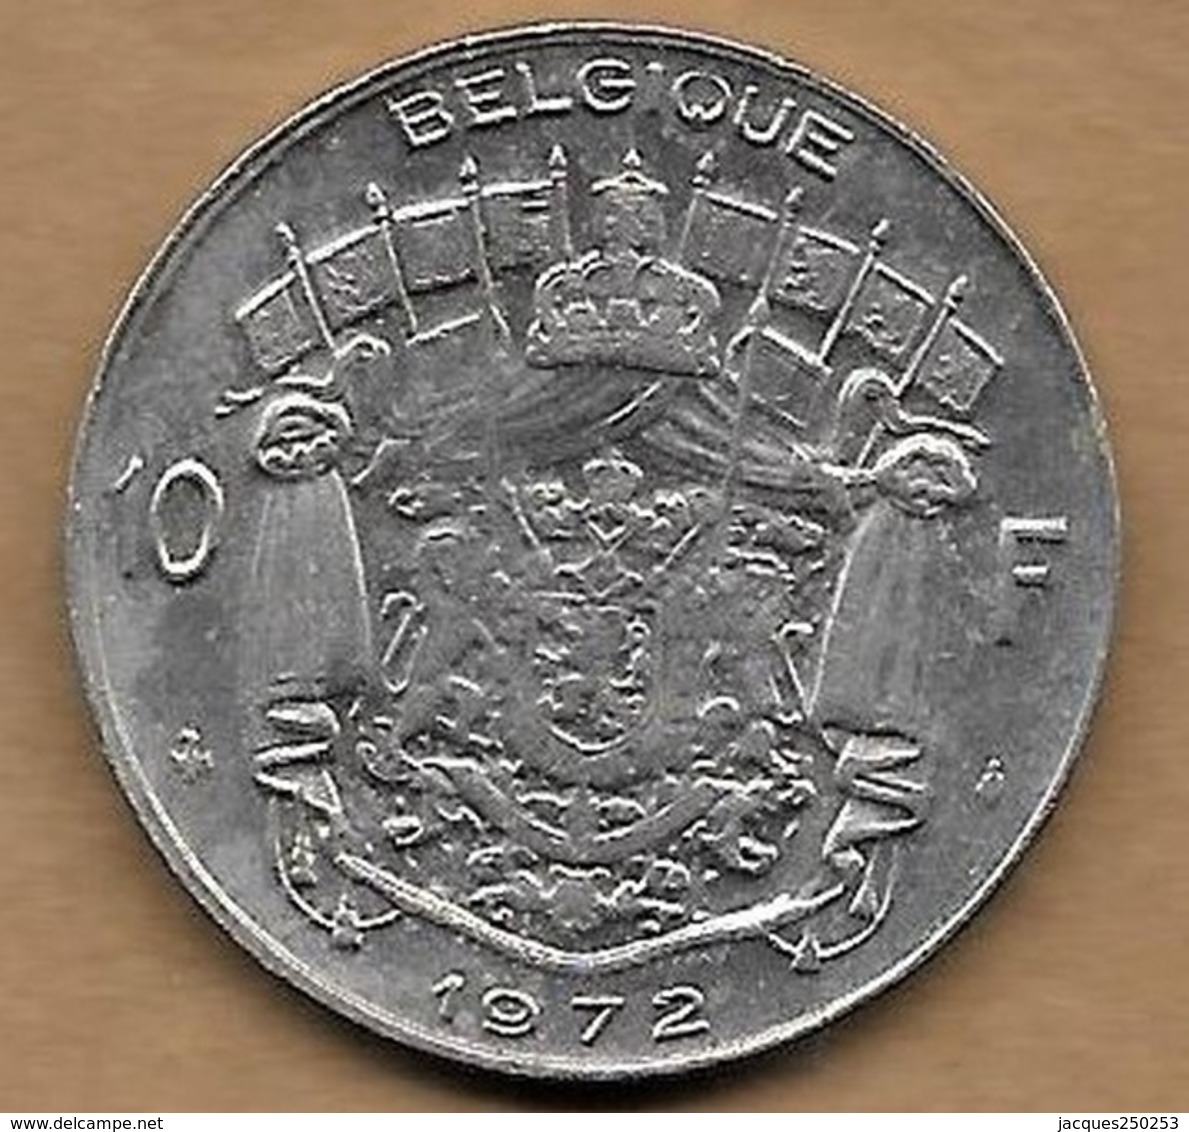 10 Francs 1972 FR - 10 Francs